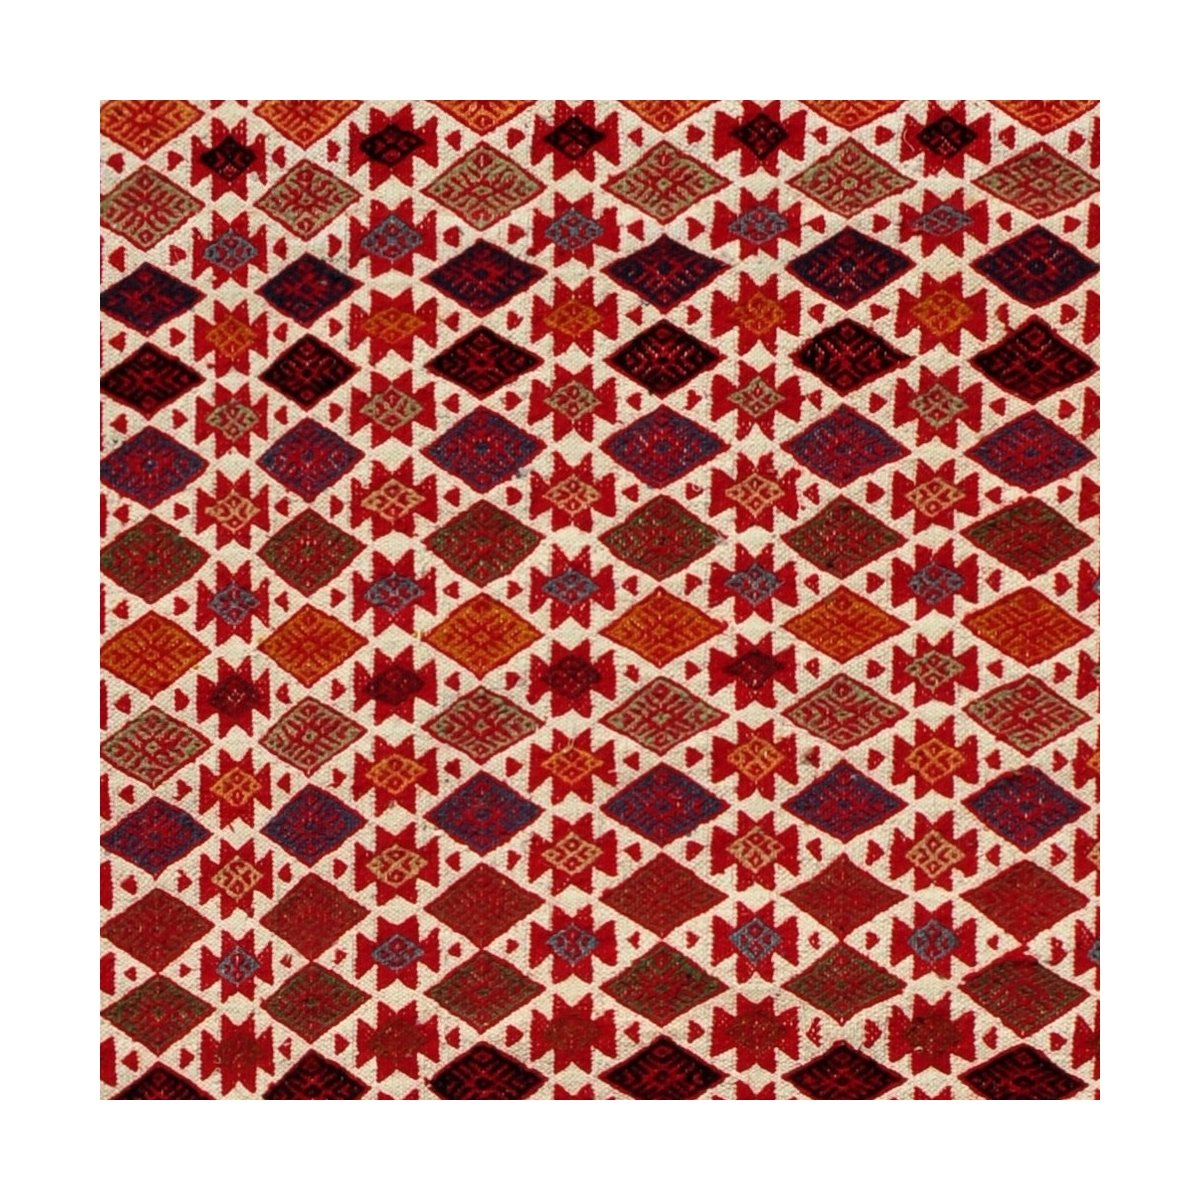 Berber tapijt Tapijt Kilim lang Jeyed 70x200 Veelkleurig (Handgeweven, Wol, Tunesië) Tunesisch kilimdeken, Marokkaanse stijl. Re